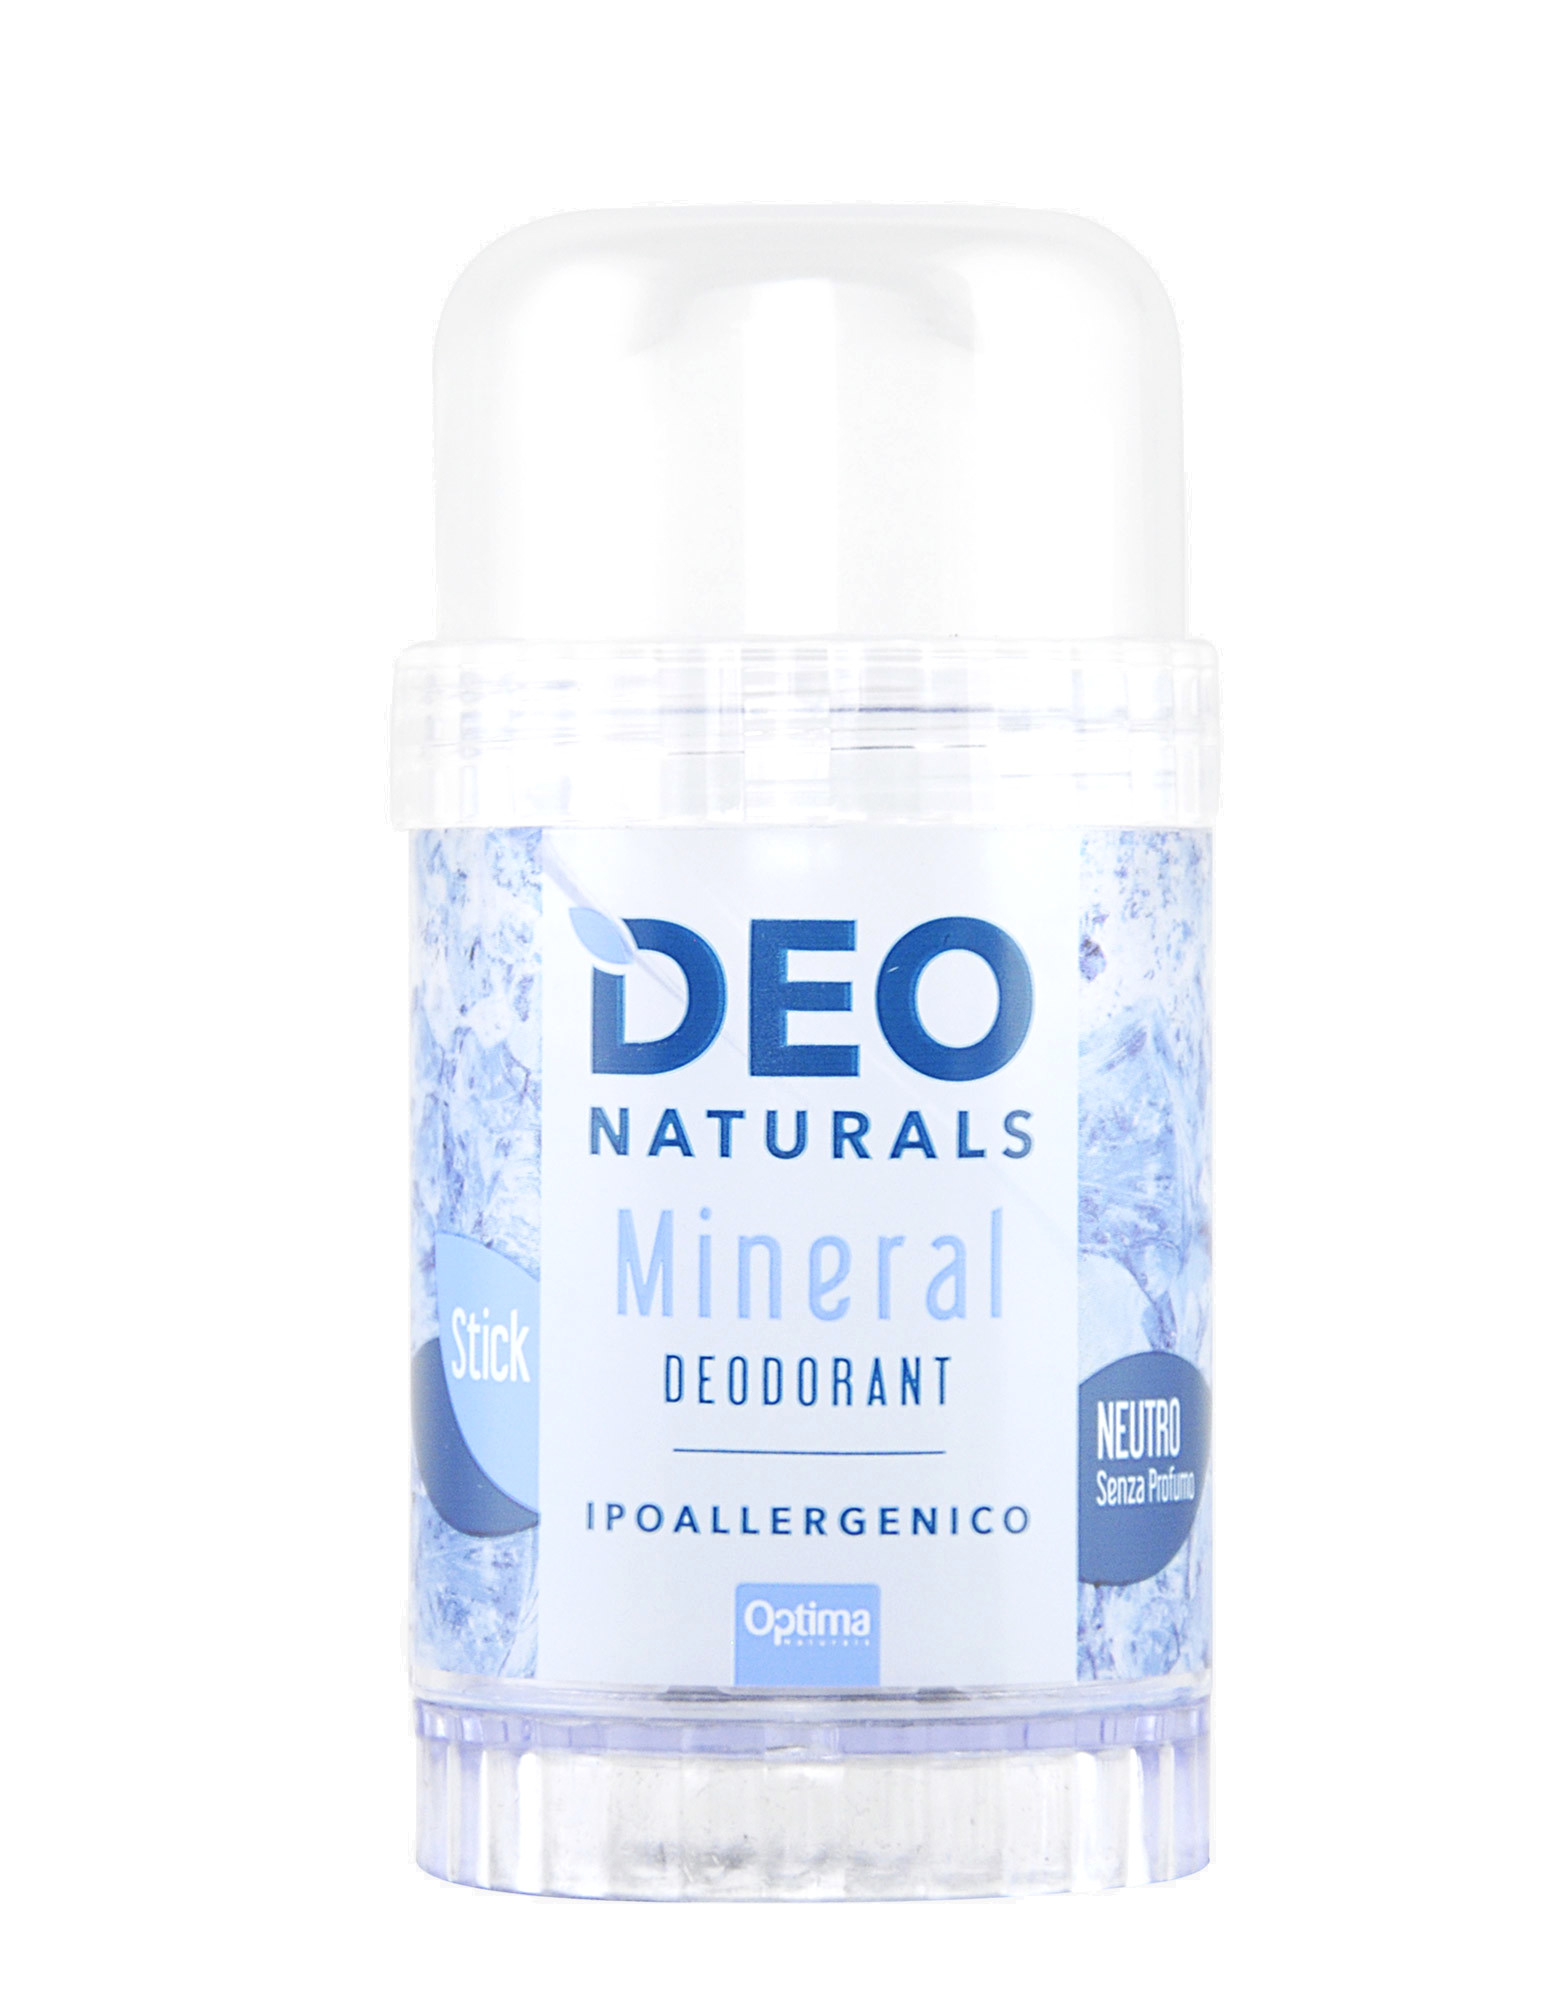 Deo Naturals Mineral Deodorant Stick Neutral by Optima, 80 grams - iafstore.com